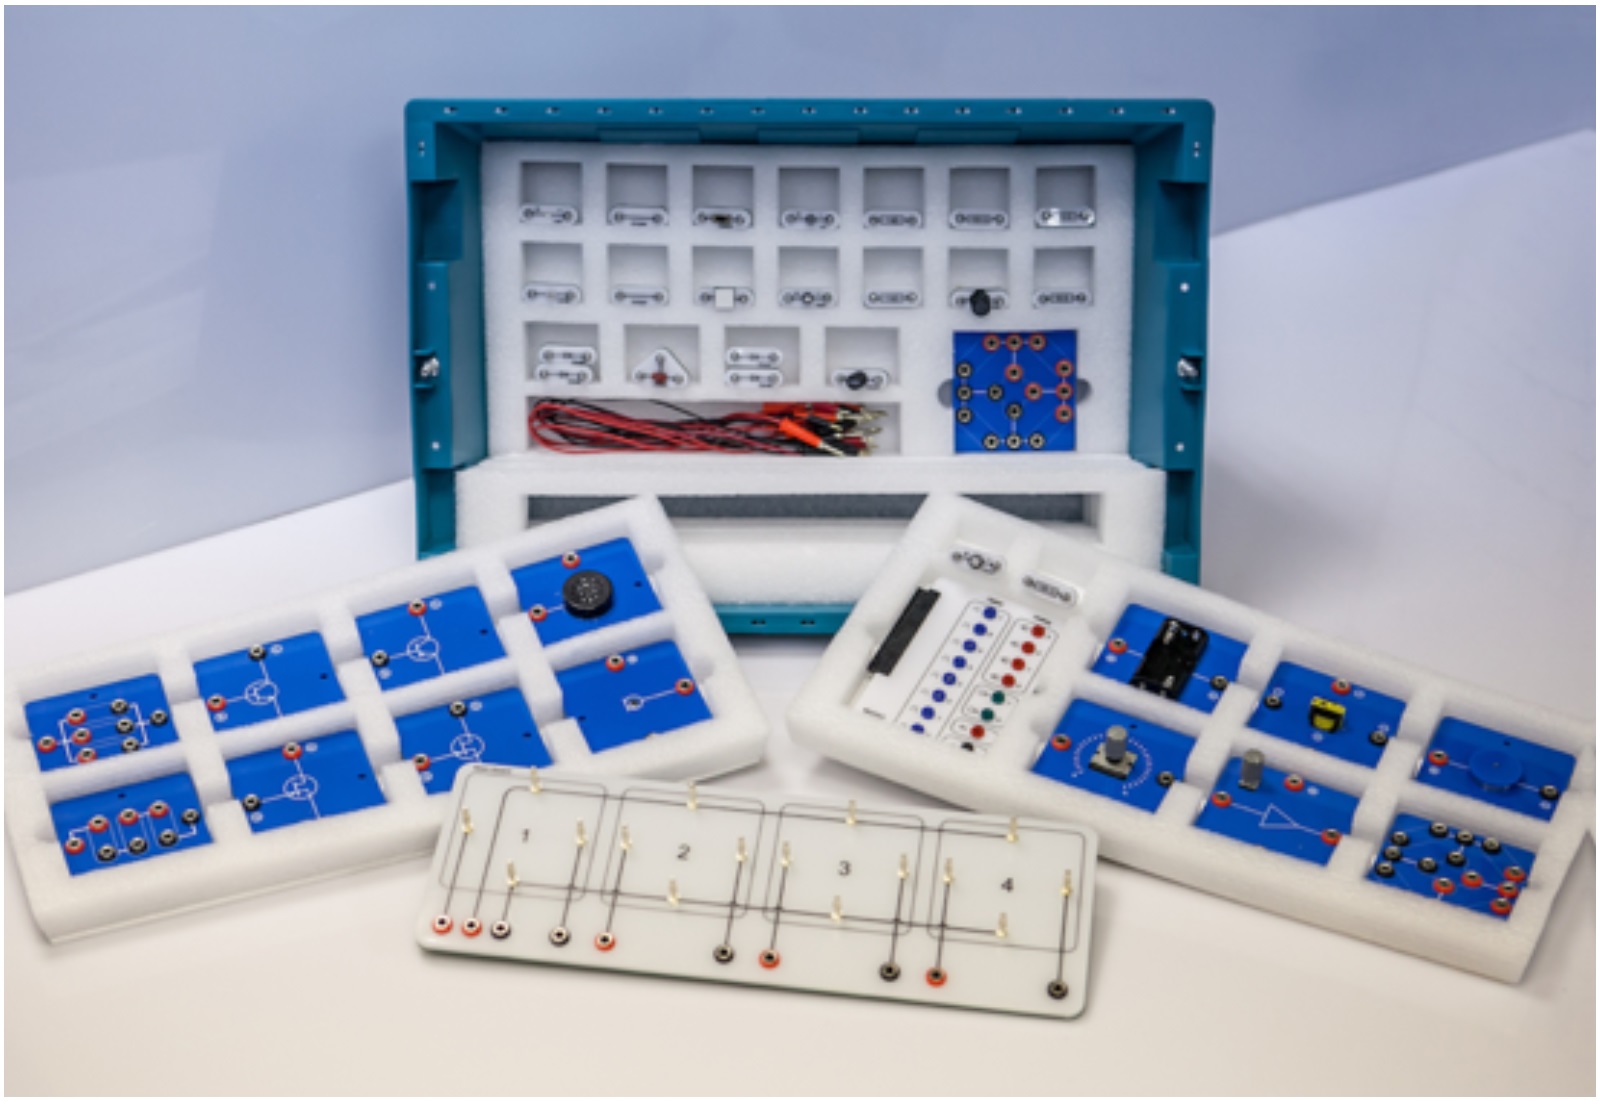 A set of fundamentals of analog electronics